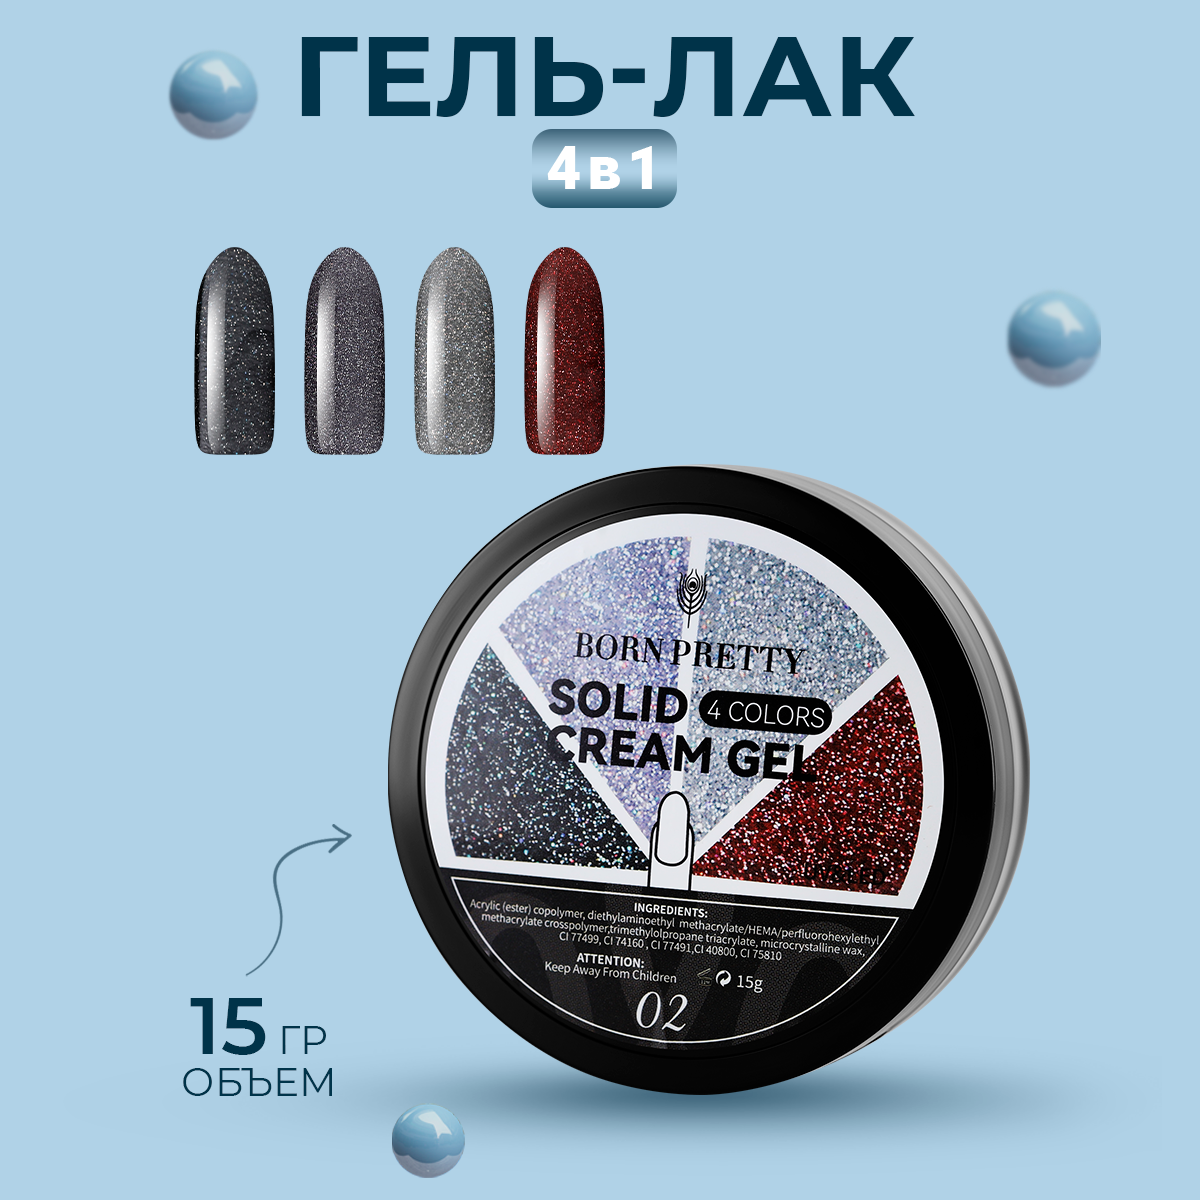 Гель-лак Born Pretty, 4 in1 Solid Cream Gel, 15 г